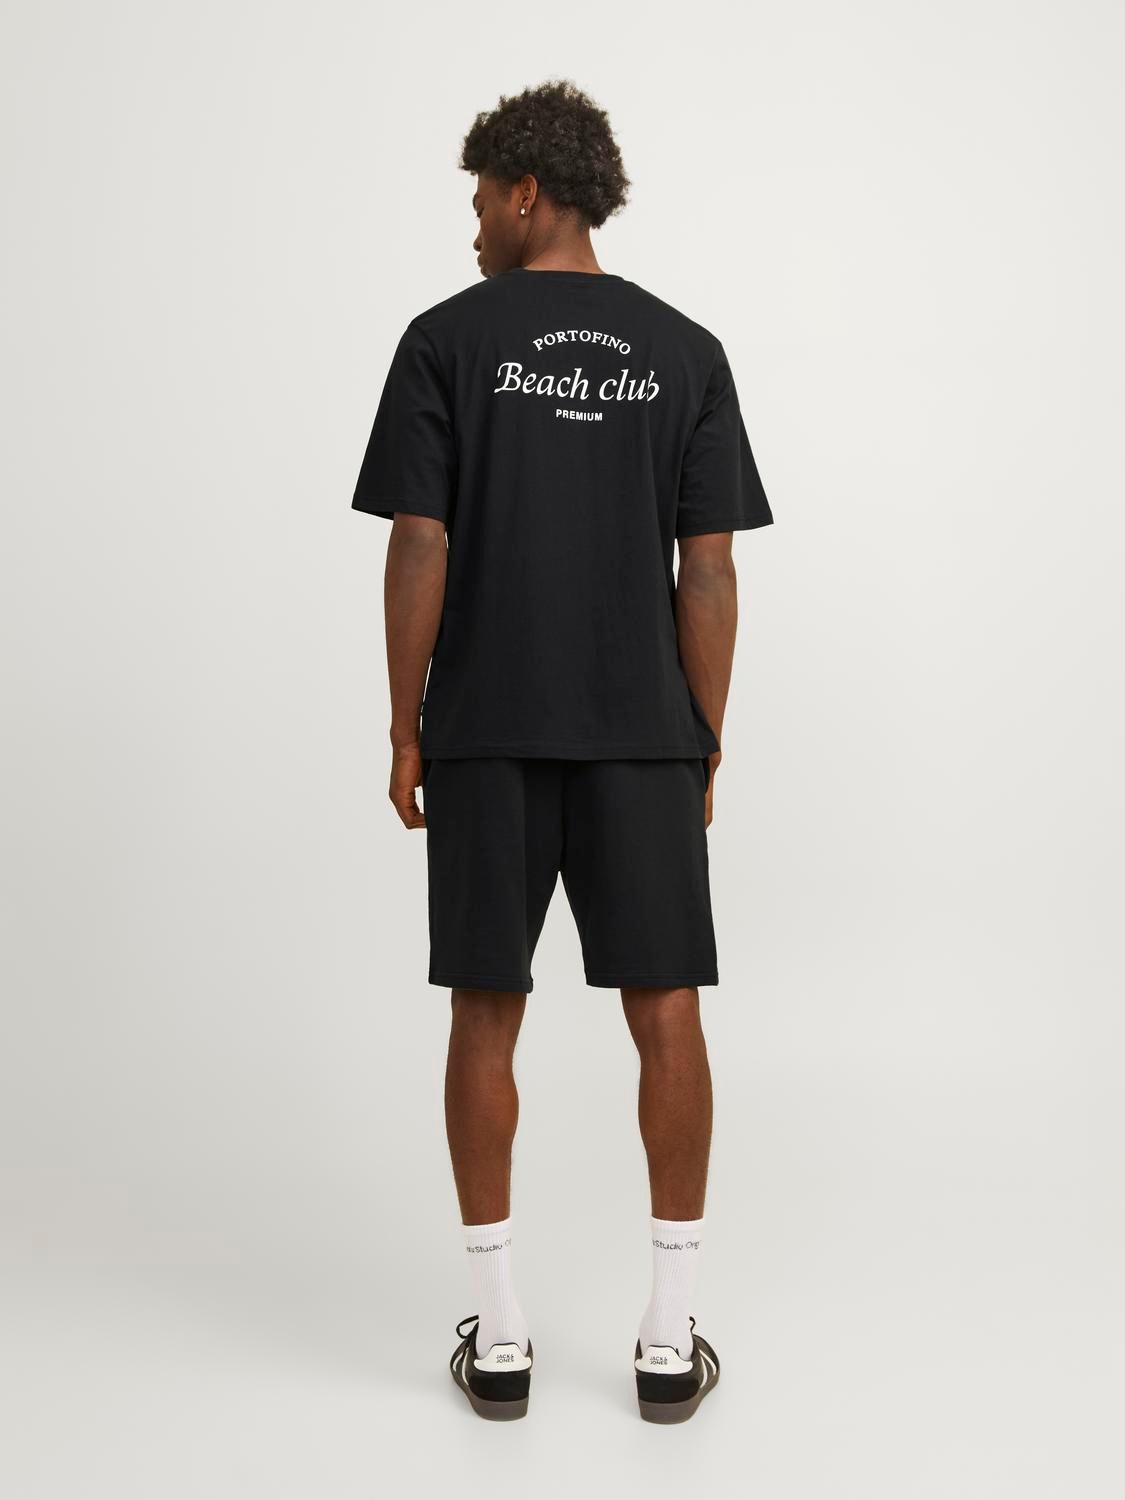 Jack & Jones Gedrukt Ronde hals T-shirt -Black Onyx - 12263520